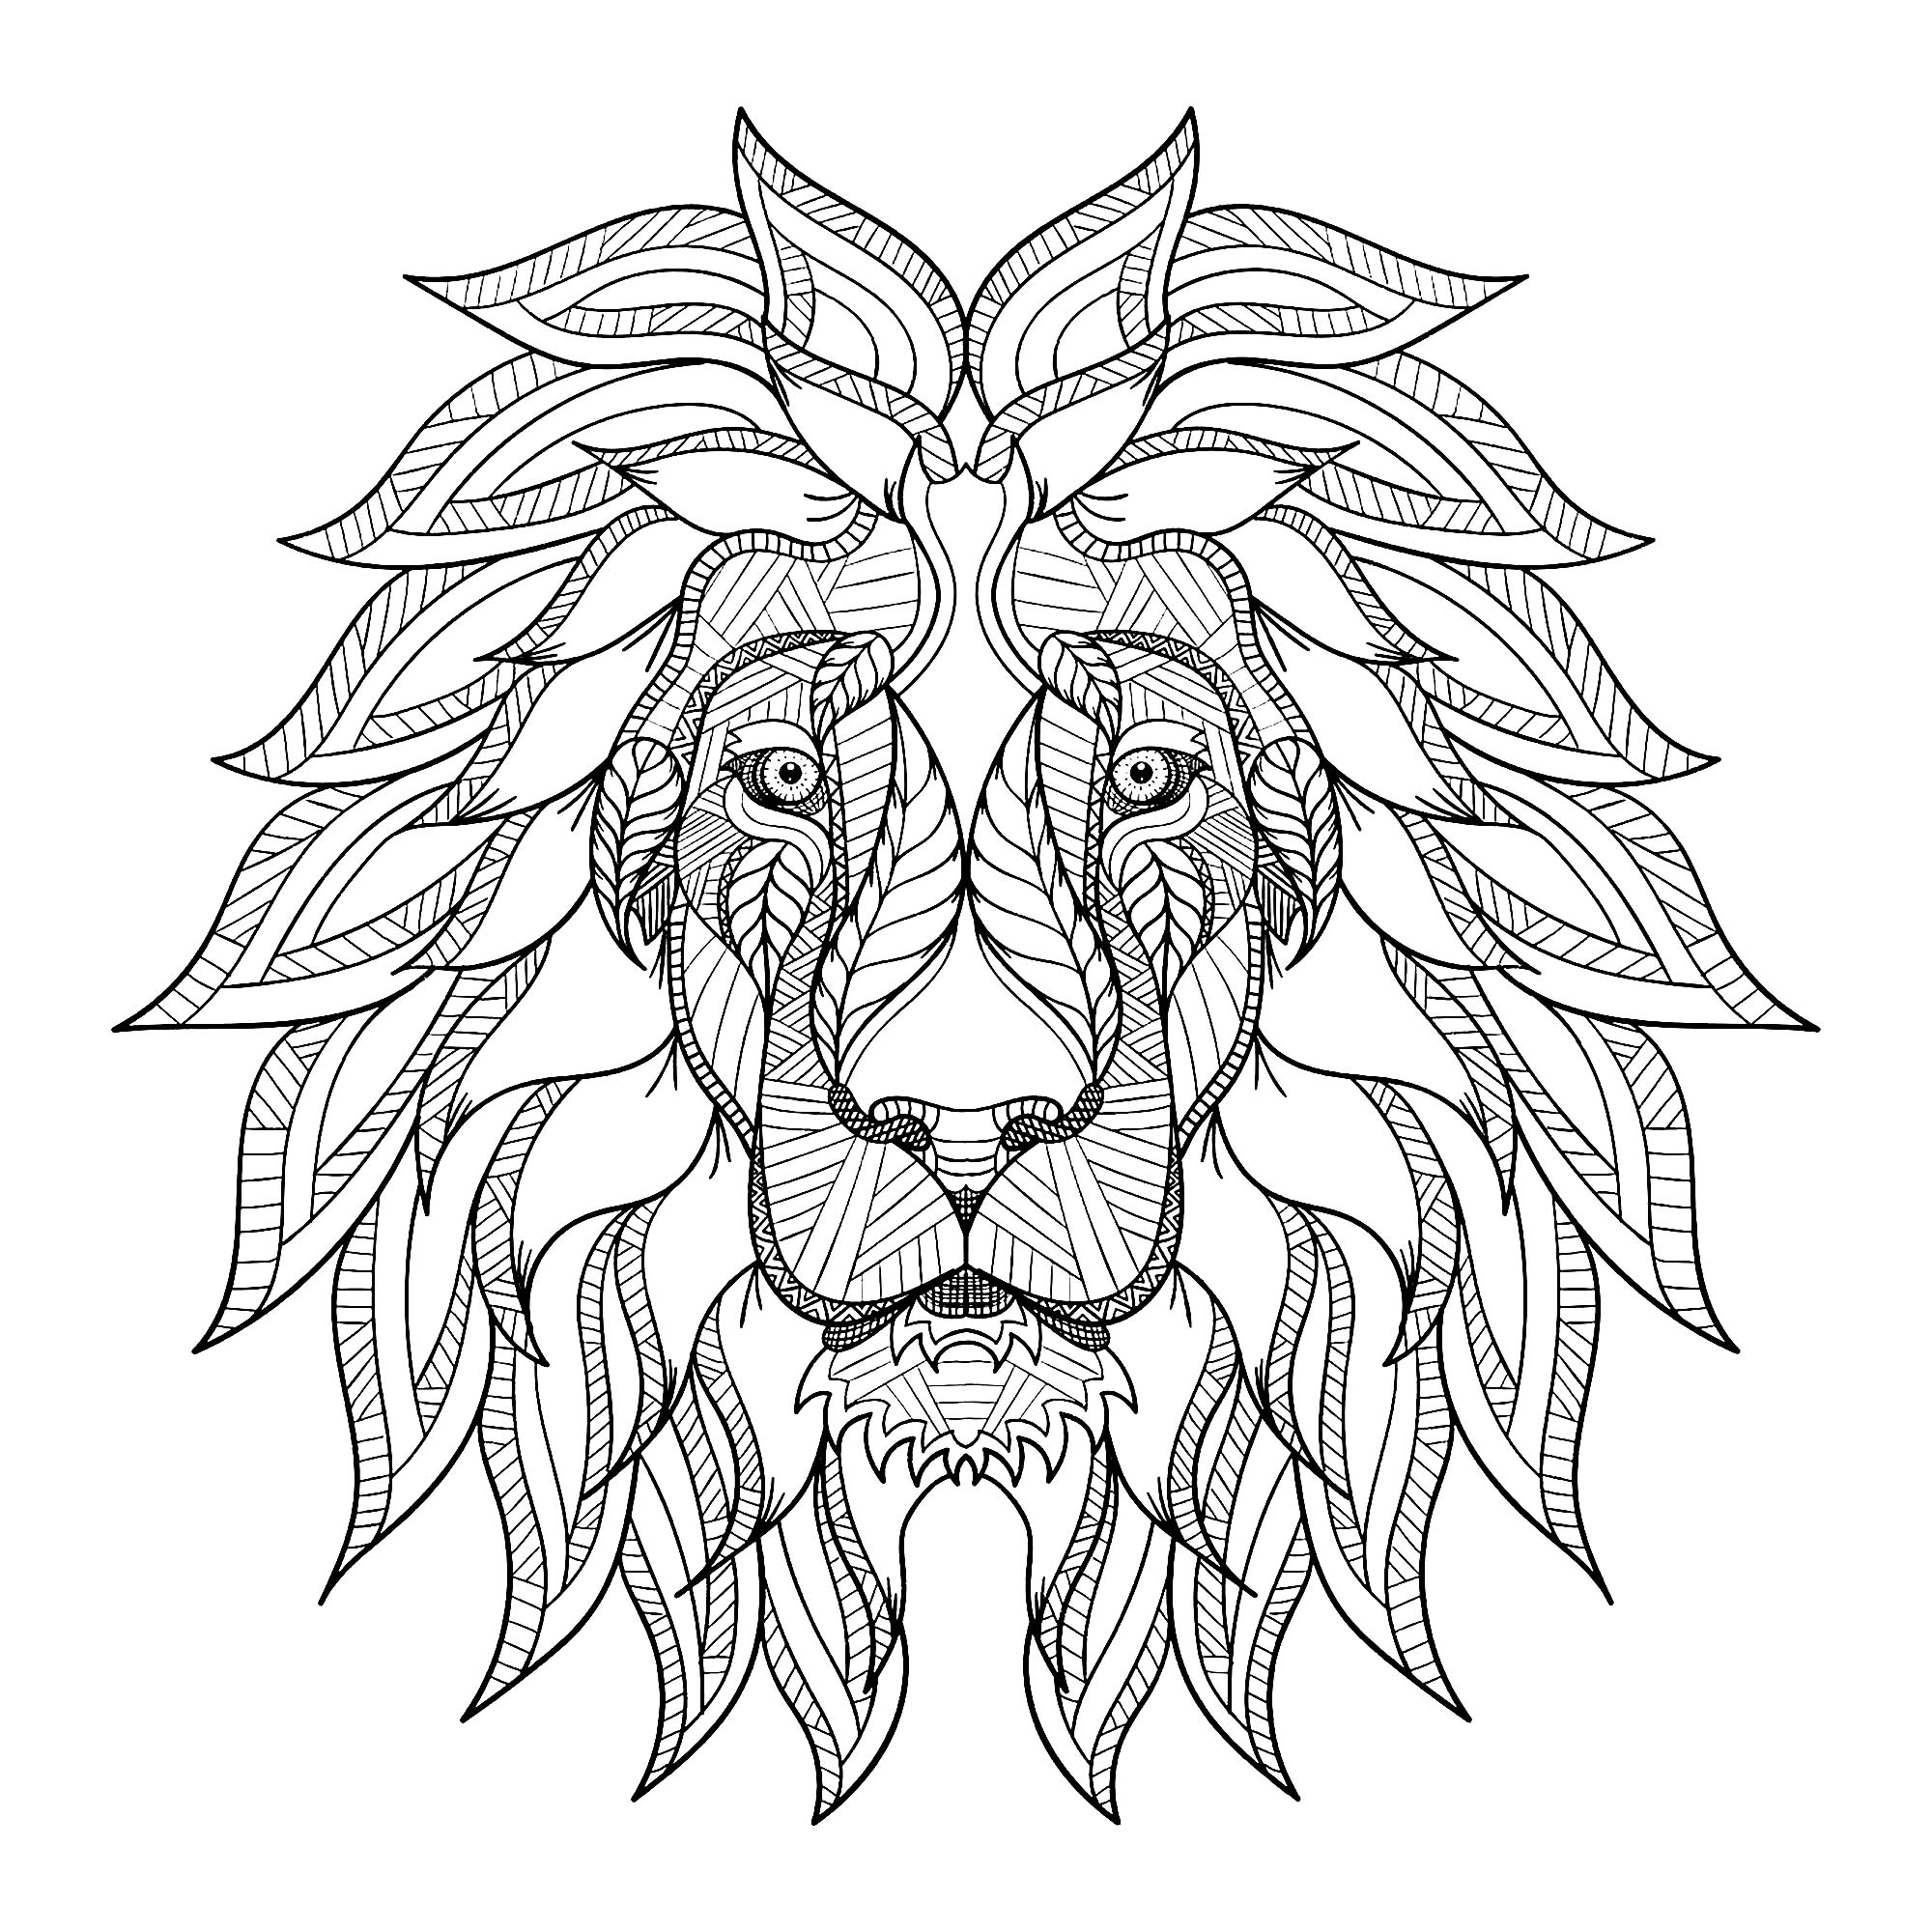 Lion's head and pretty mane, Artist : Roman Poljak   Source : 123rf